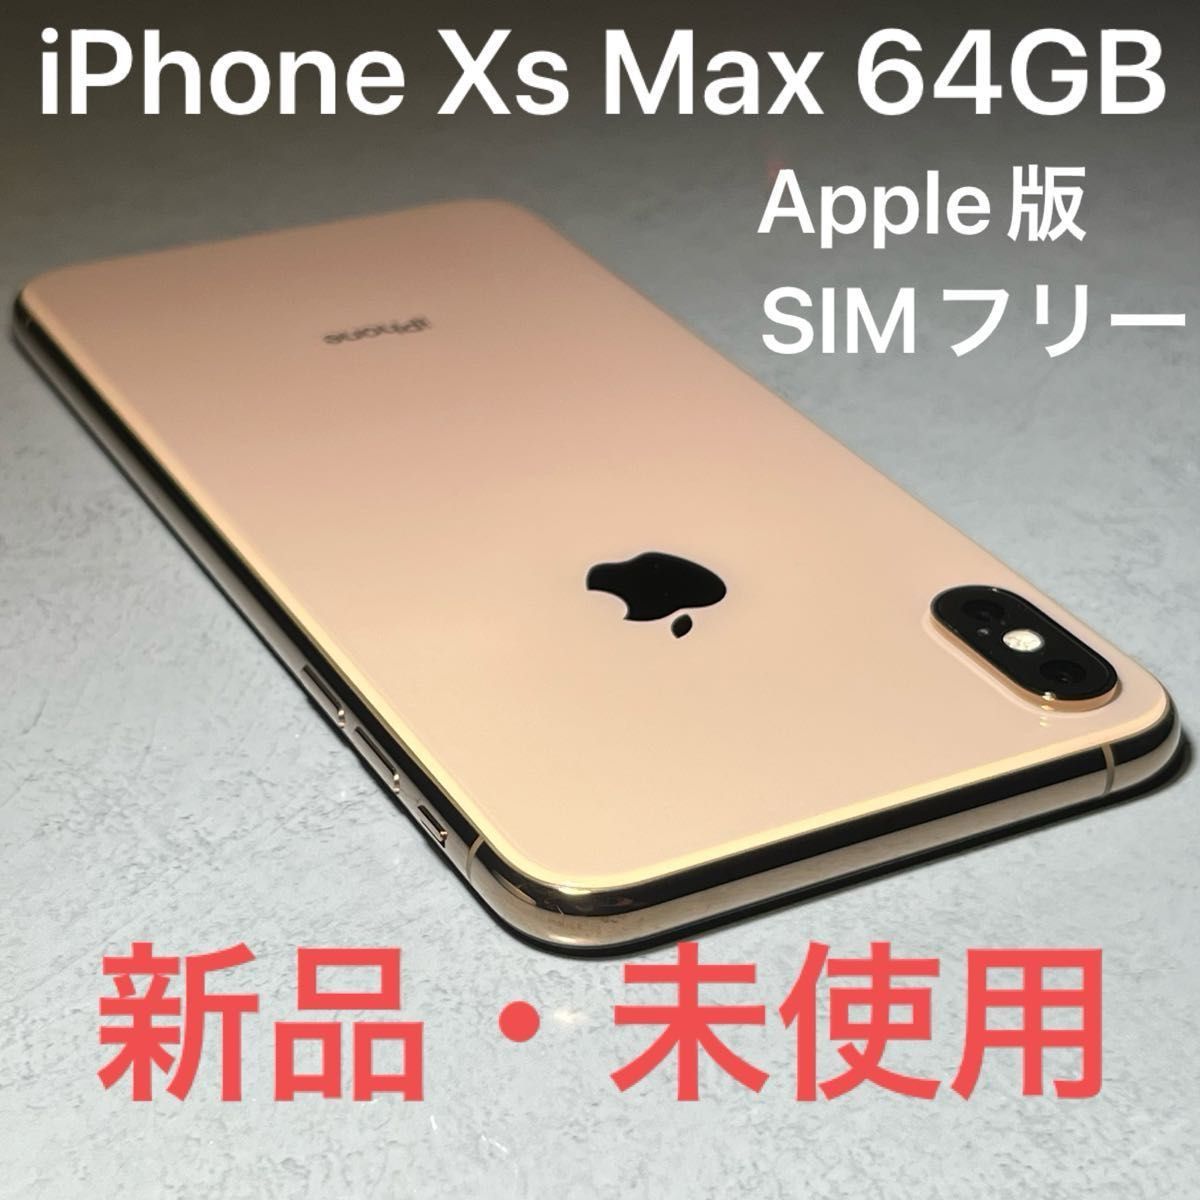 Apple iPhone Xs MAX 64GB アップル版 SIMフリー ゴールド 新品 未使用